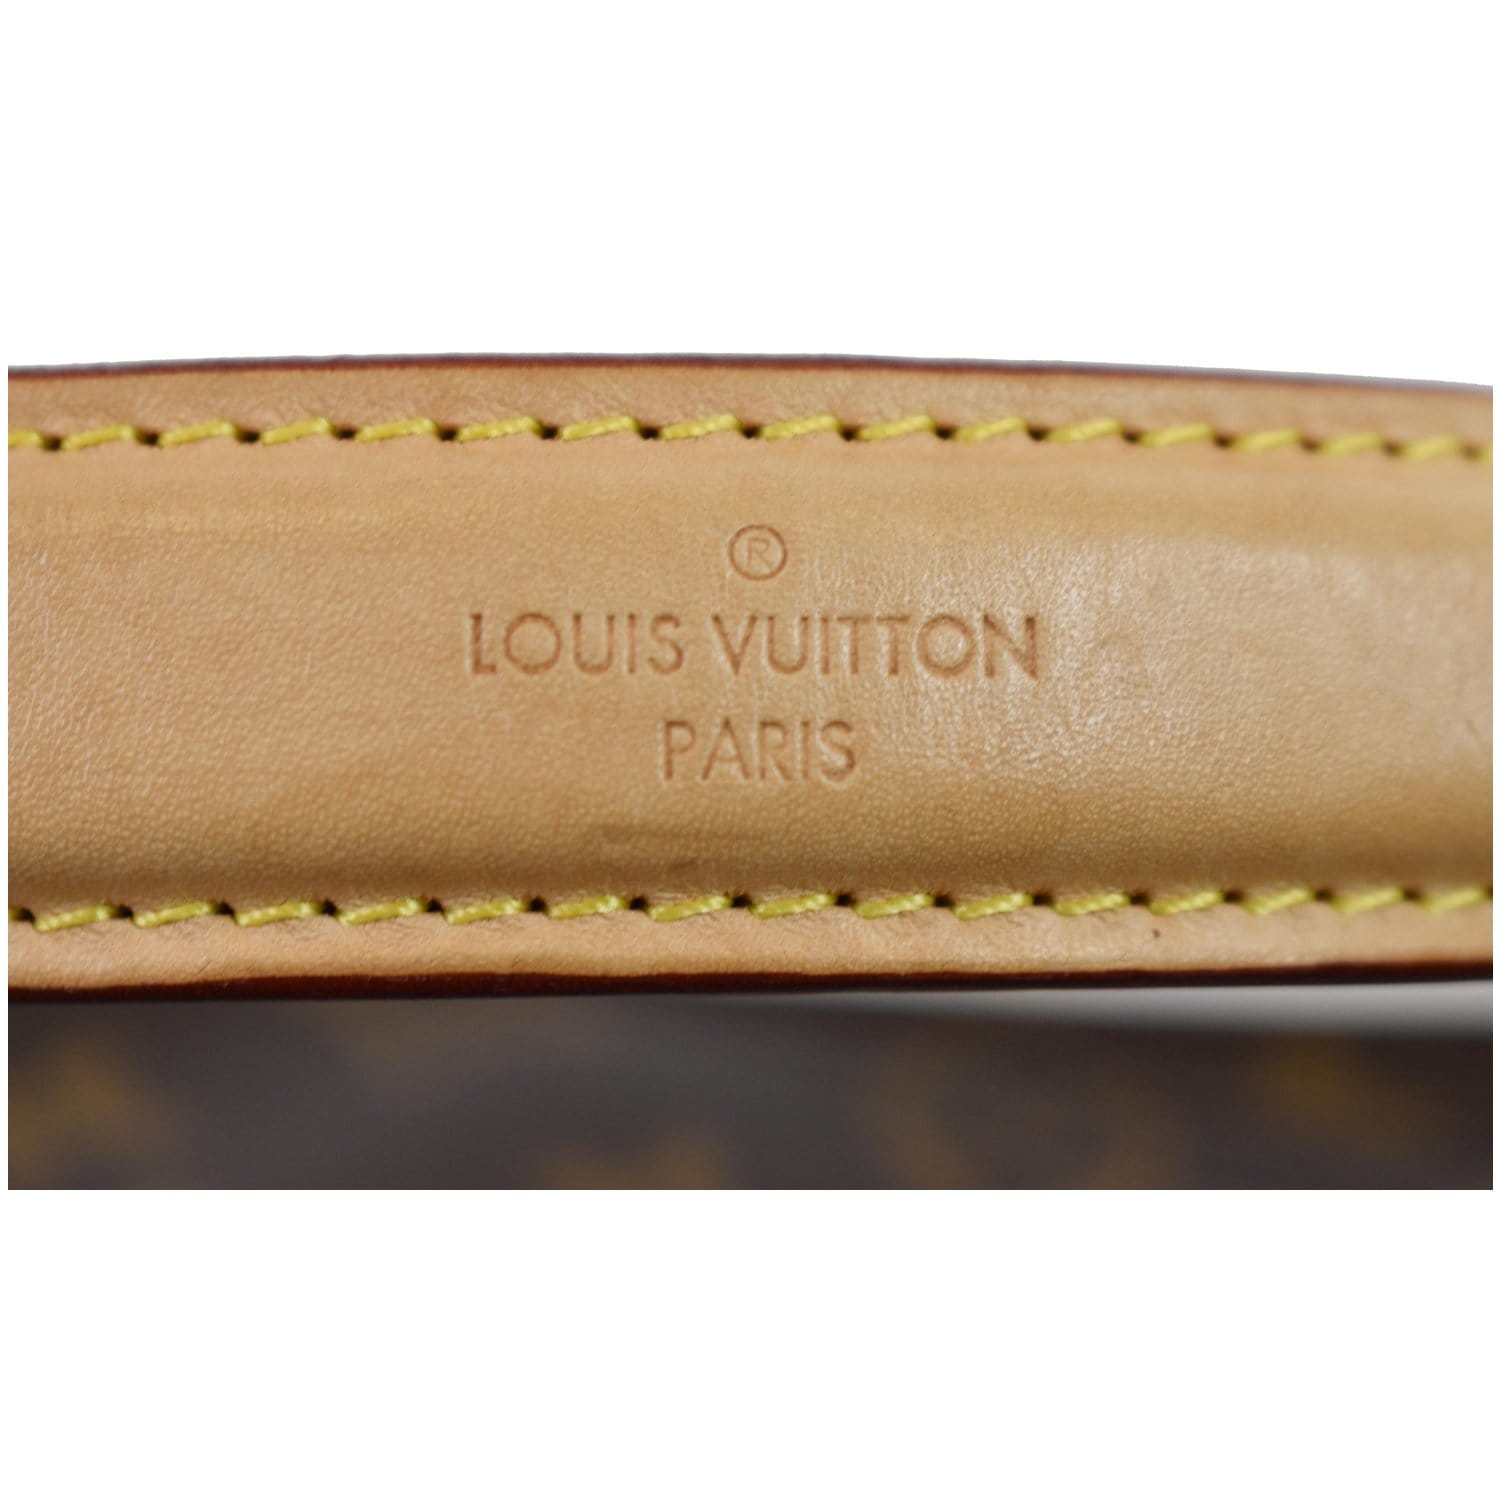 Louis Vuitton Metis Hobo 2way Terre17lr0613 Brown Monogram